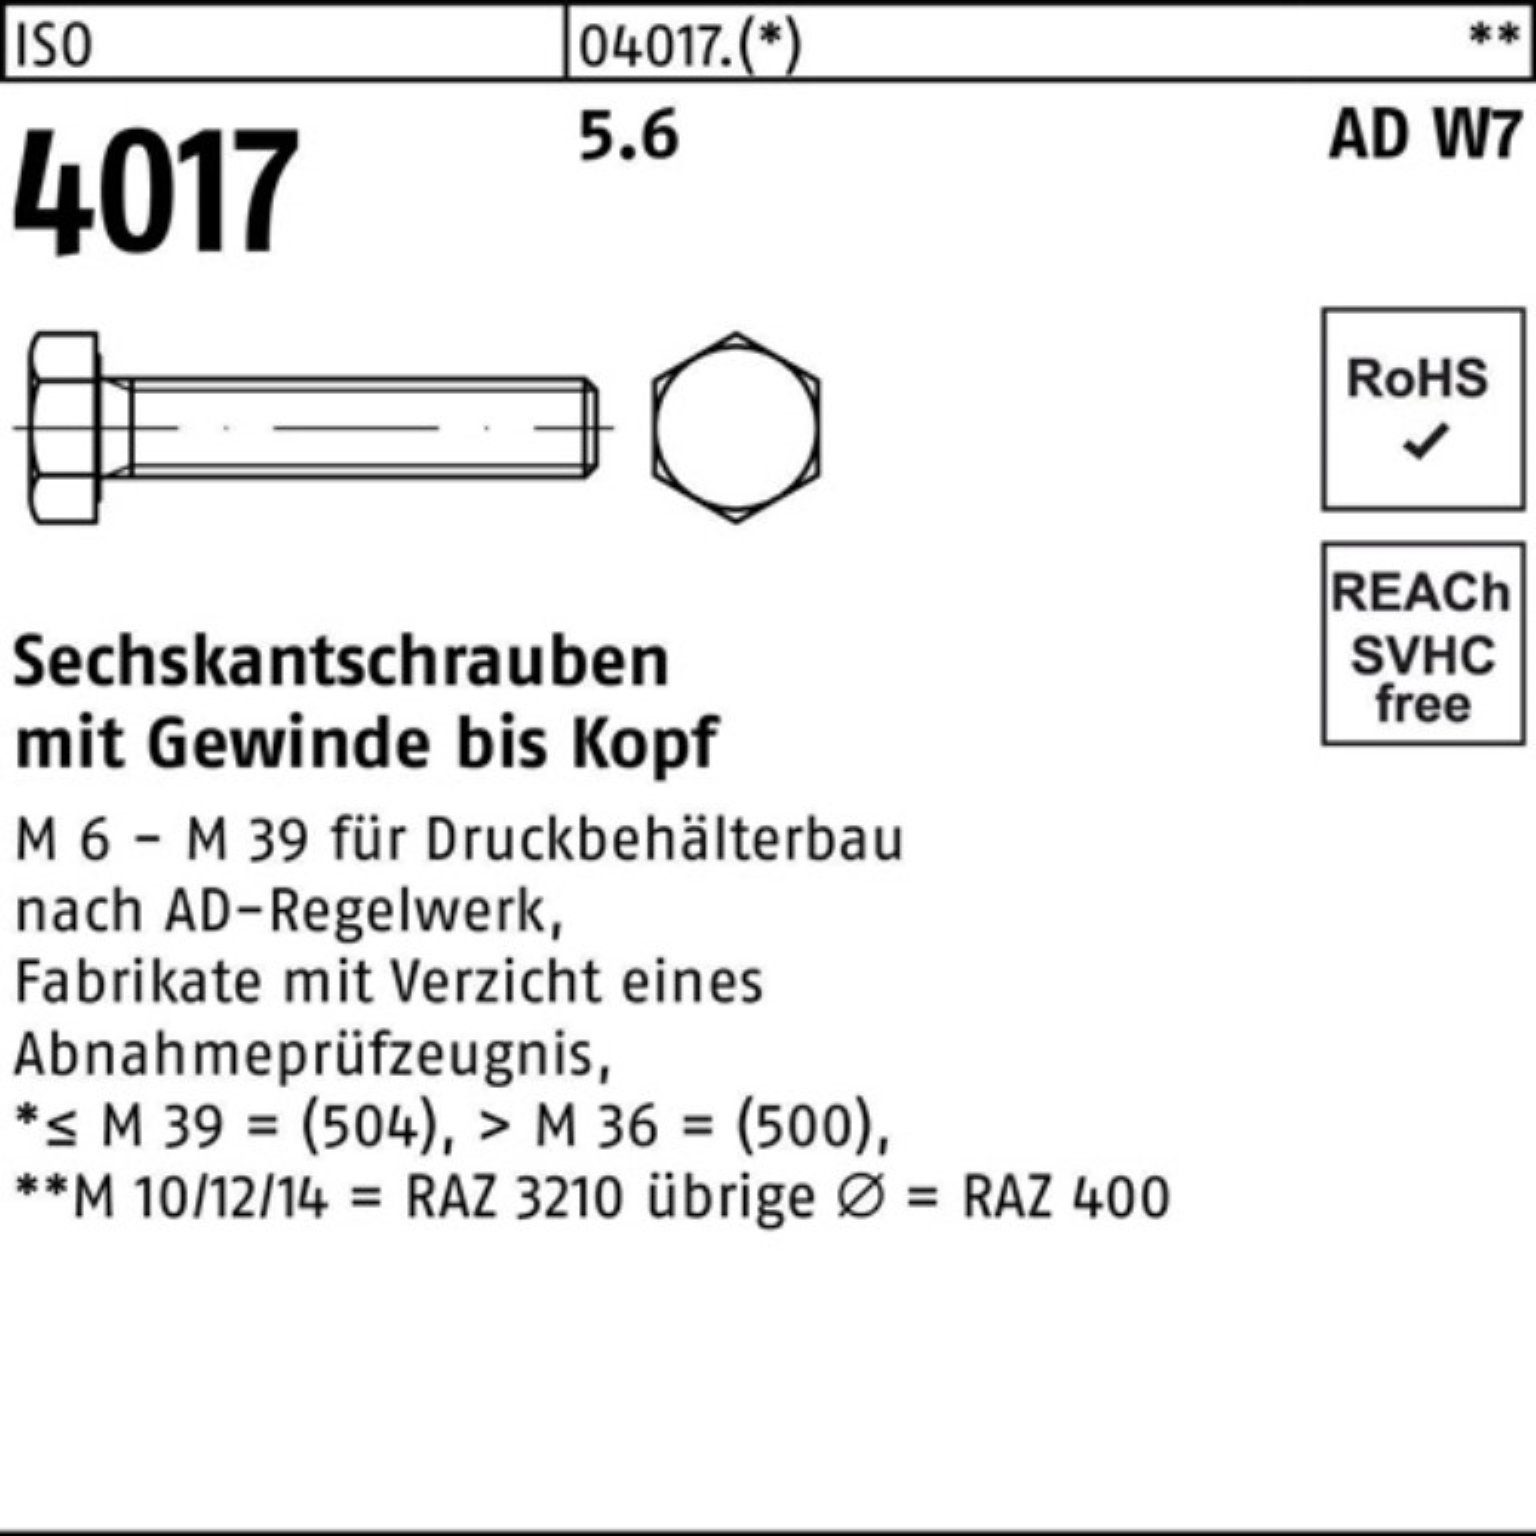 Sechskantschraube 1 Bufab 5.6 100 M33x Pack Sechskantschraube Stück 4017 AD ISO I VG W7 100er